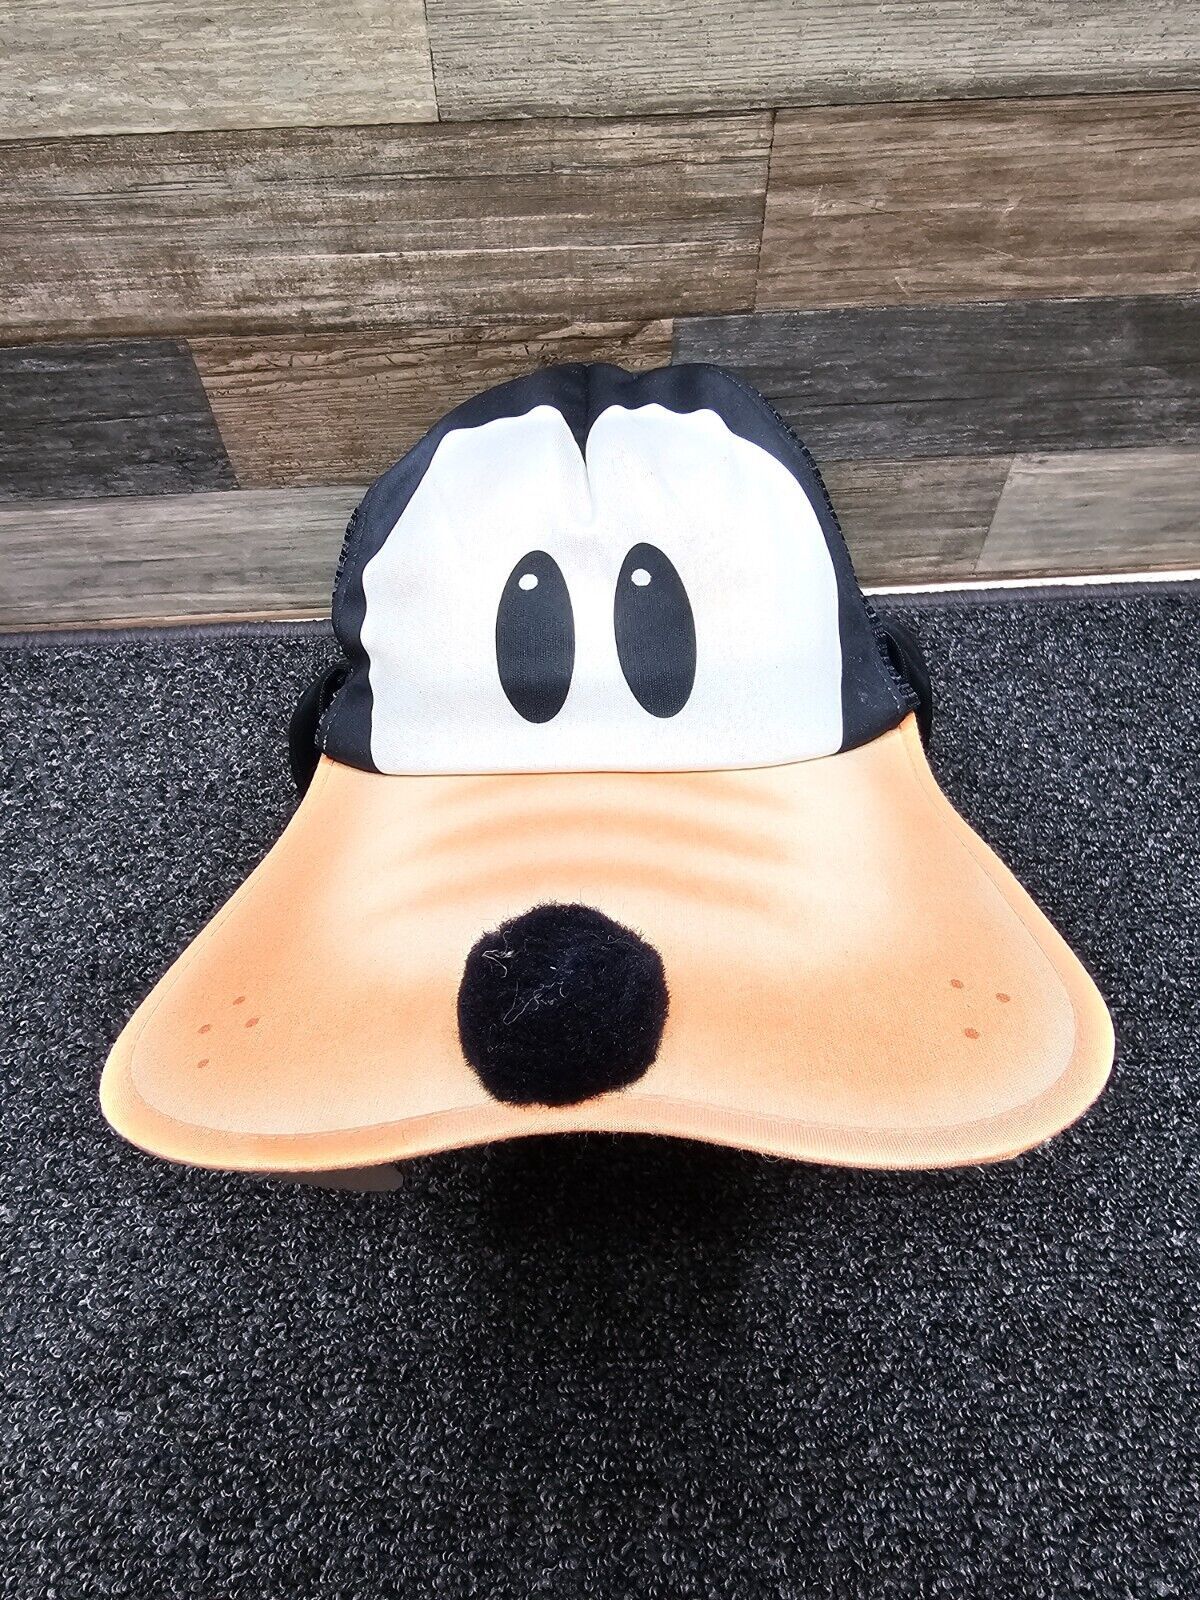 Disneyland Goofy Hat Baseball Cap One Size Fits Most Child Size Vintage - $14.50